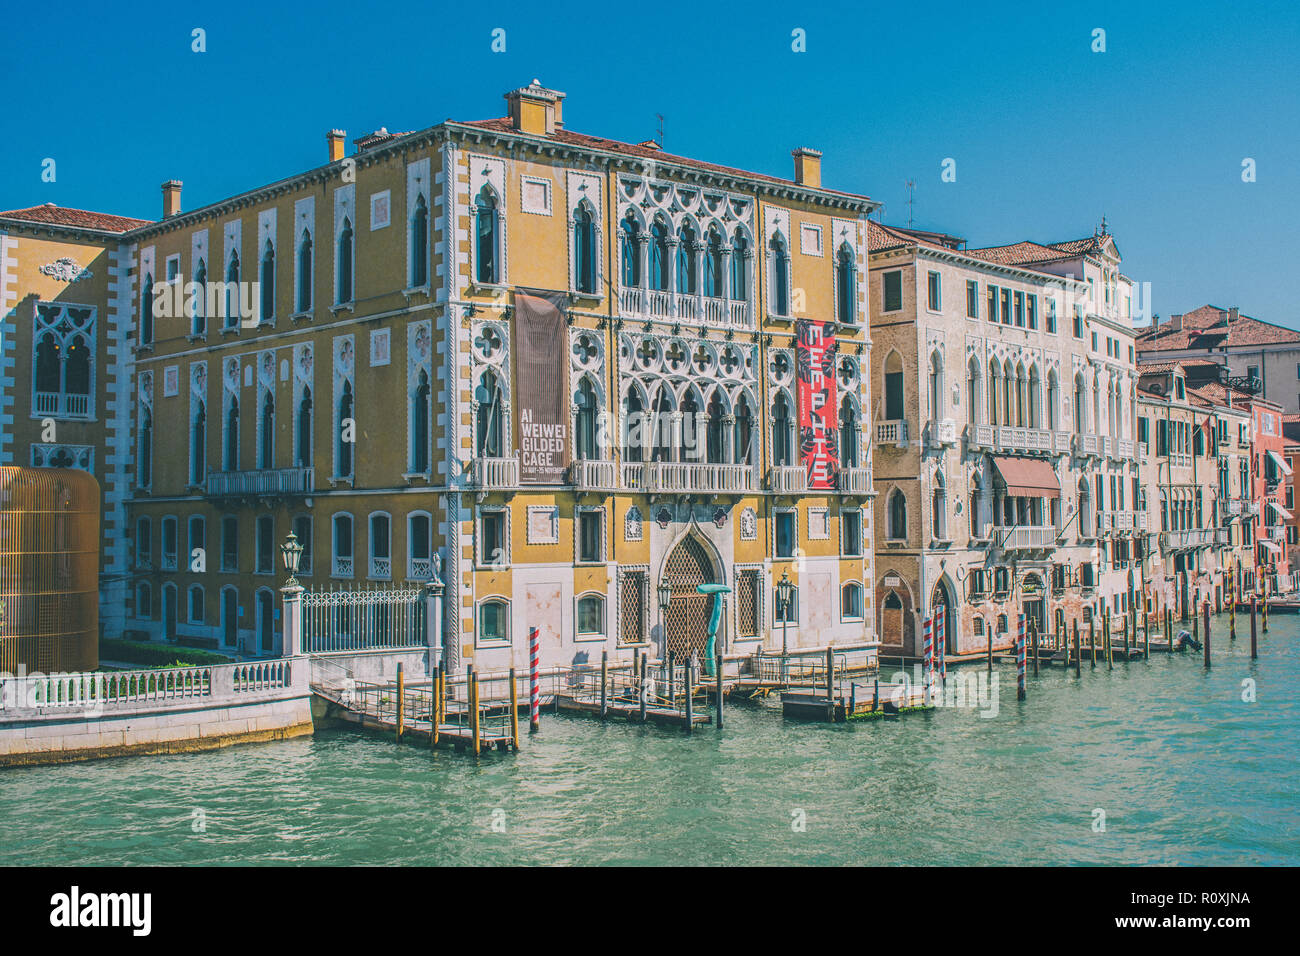 Palazzo Cavalli-Franchetti in Venice, Italy Stock Photo